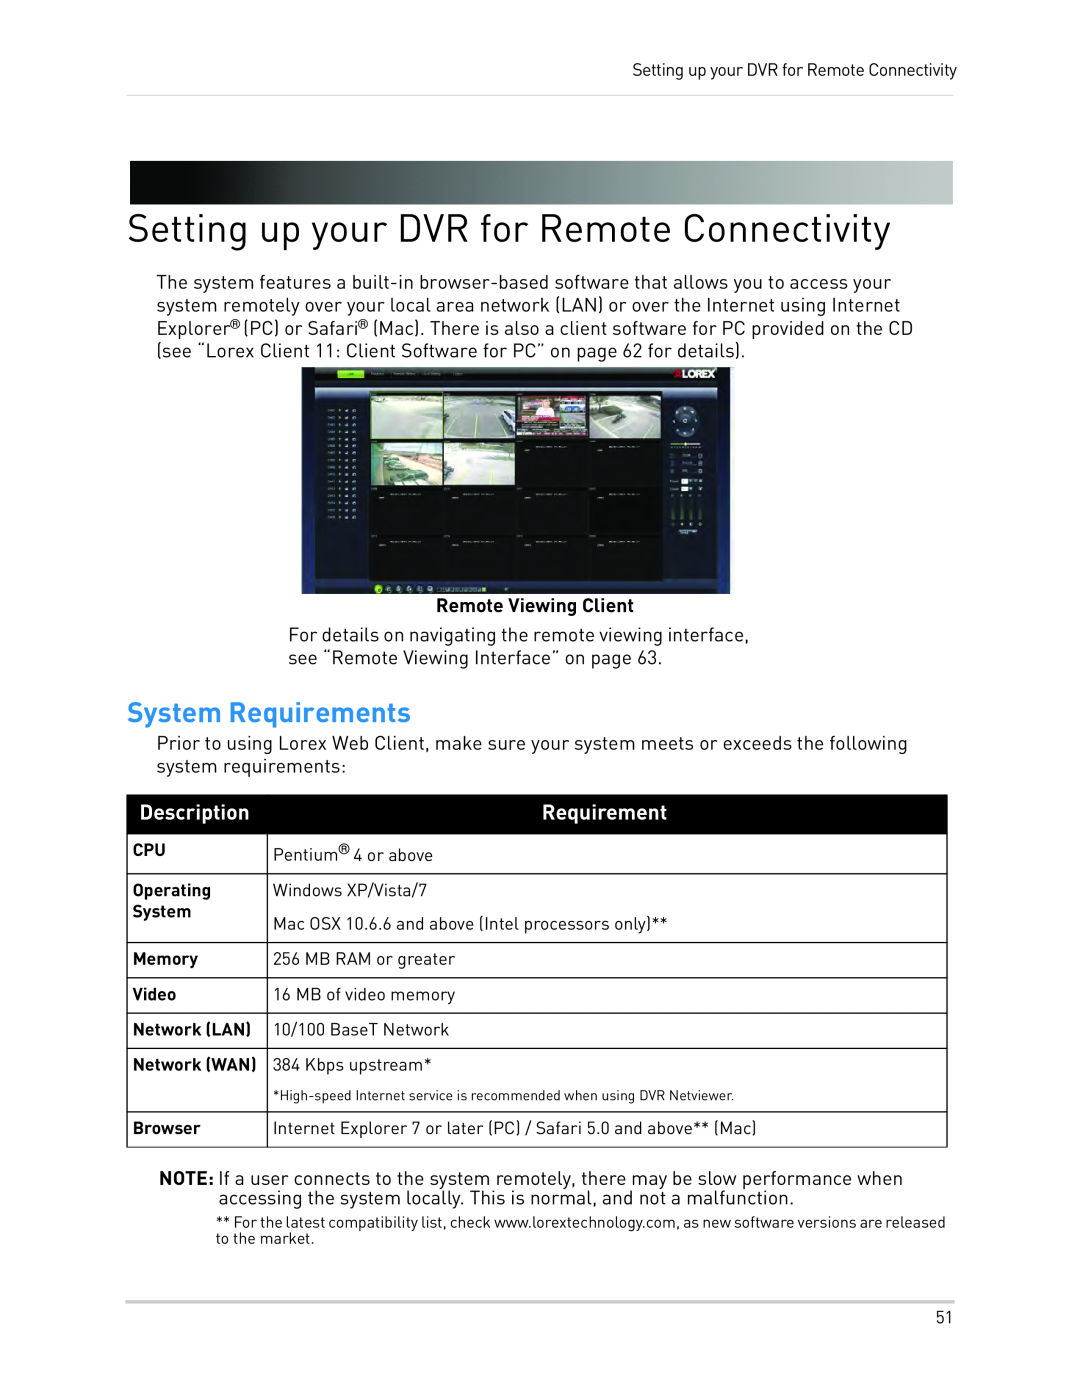 LOREX Technology LH130, LH1361001C8B Setting up your DVR for Remote Connectivity, System Requirements, Description 